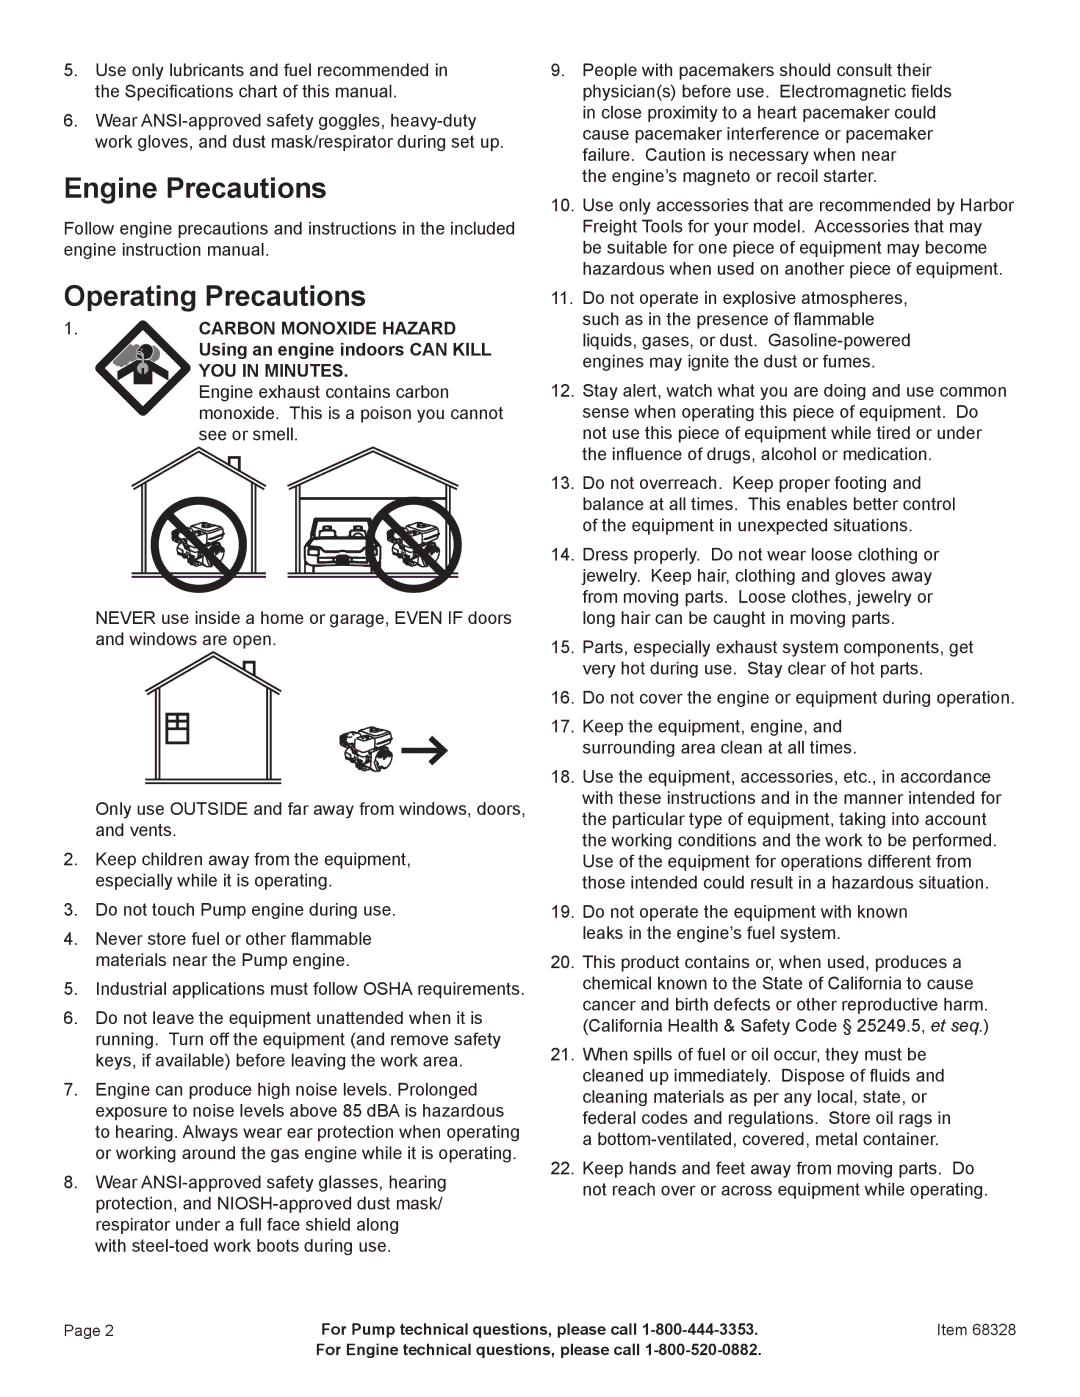 Harbor Freight Tools 68328 manual Engine Precautions Operating Precautions 